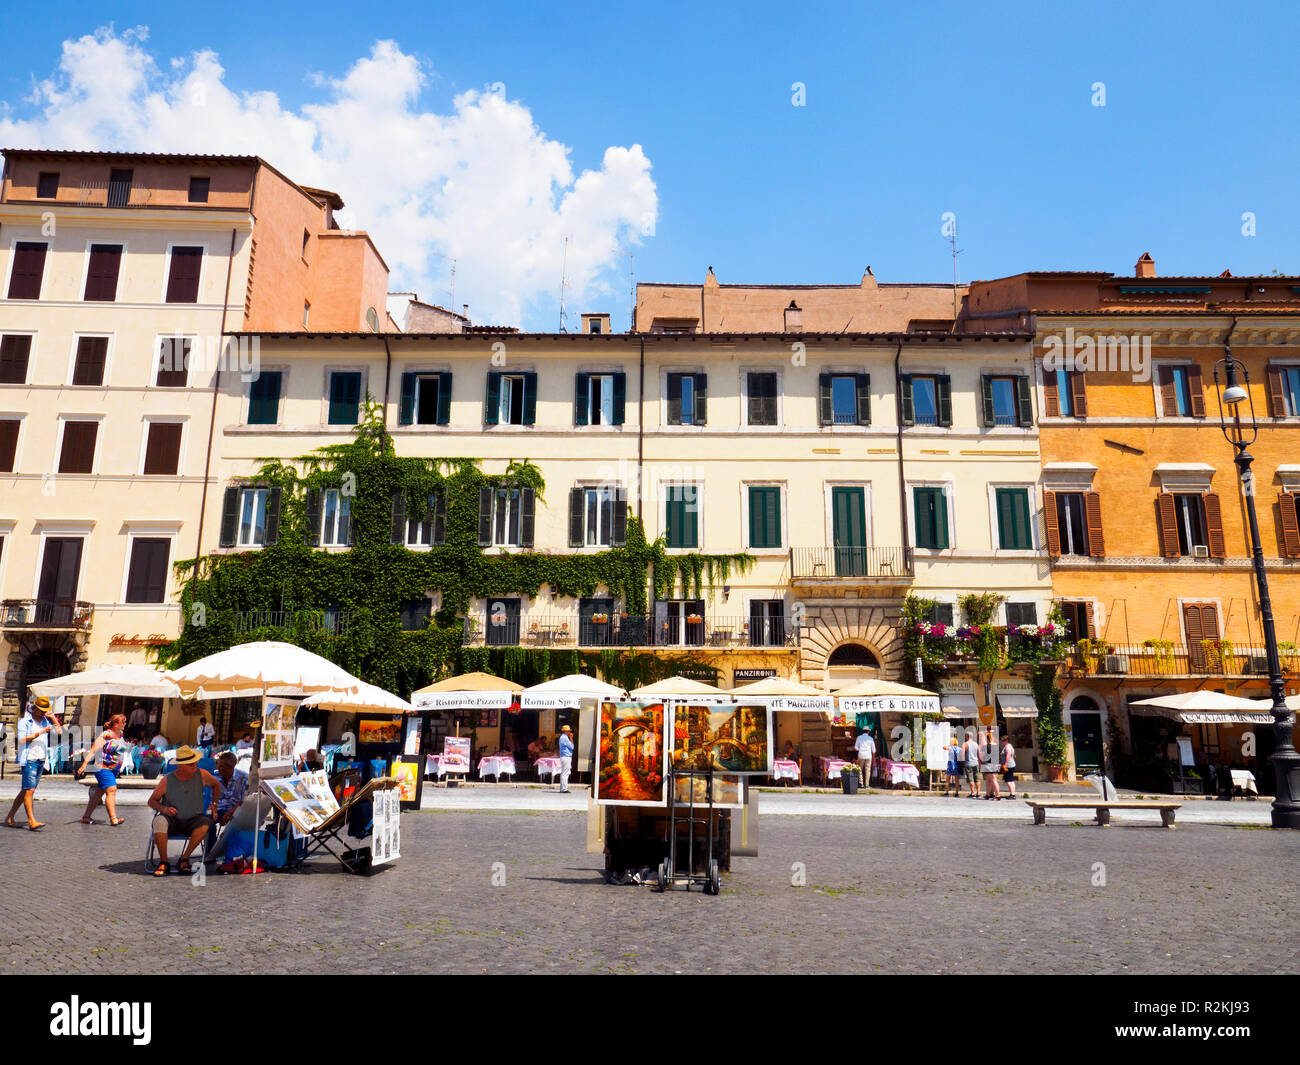 Building facade in Piazza Navona - Rome, Italy Stock Photo